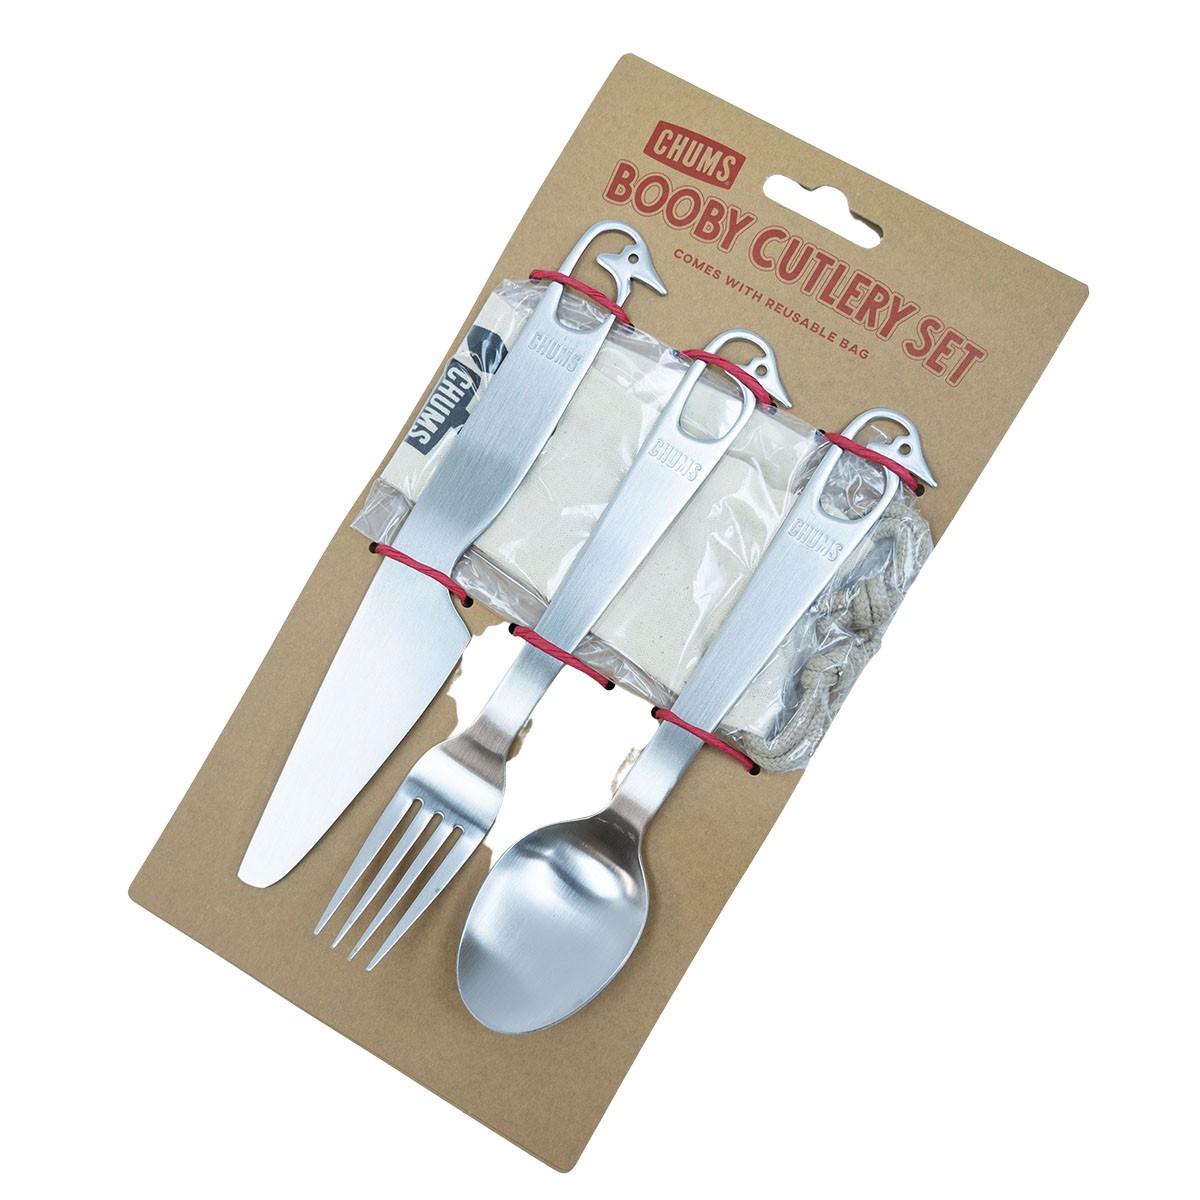 Chums Booby Cutlery Set 造型餐具套裝 不銹鋼 日本製造